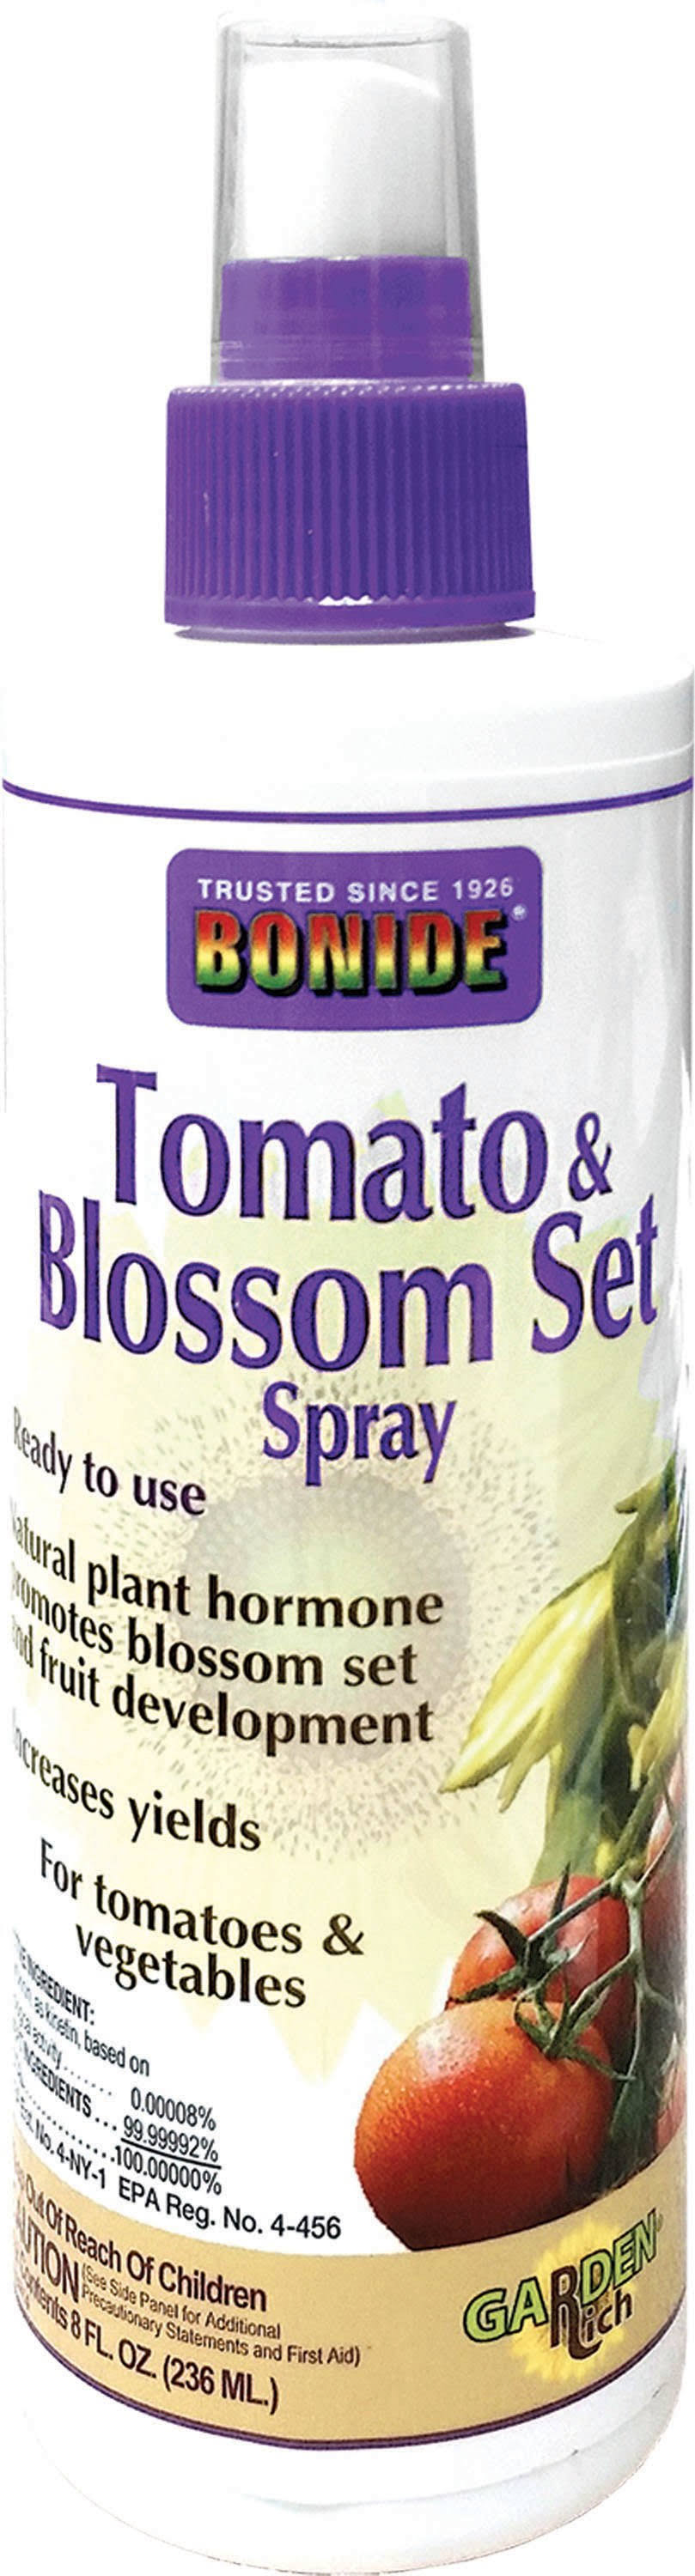 Bonide Ready-to-Use Tomato & Blossom Set - 8 oz